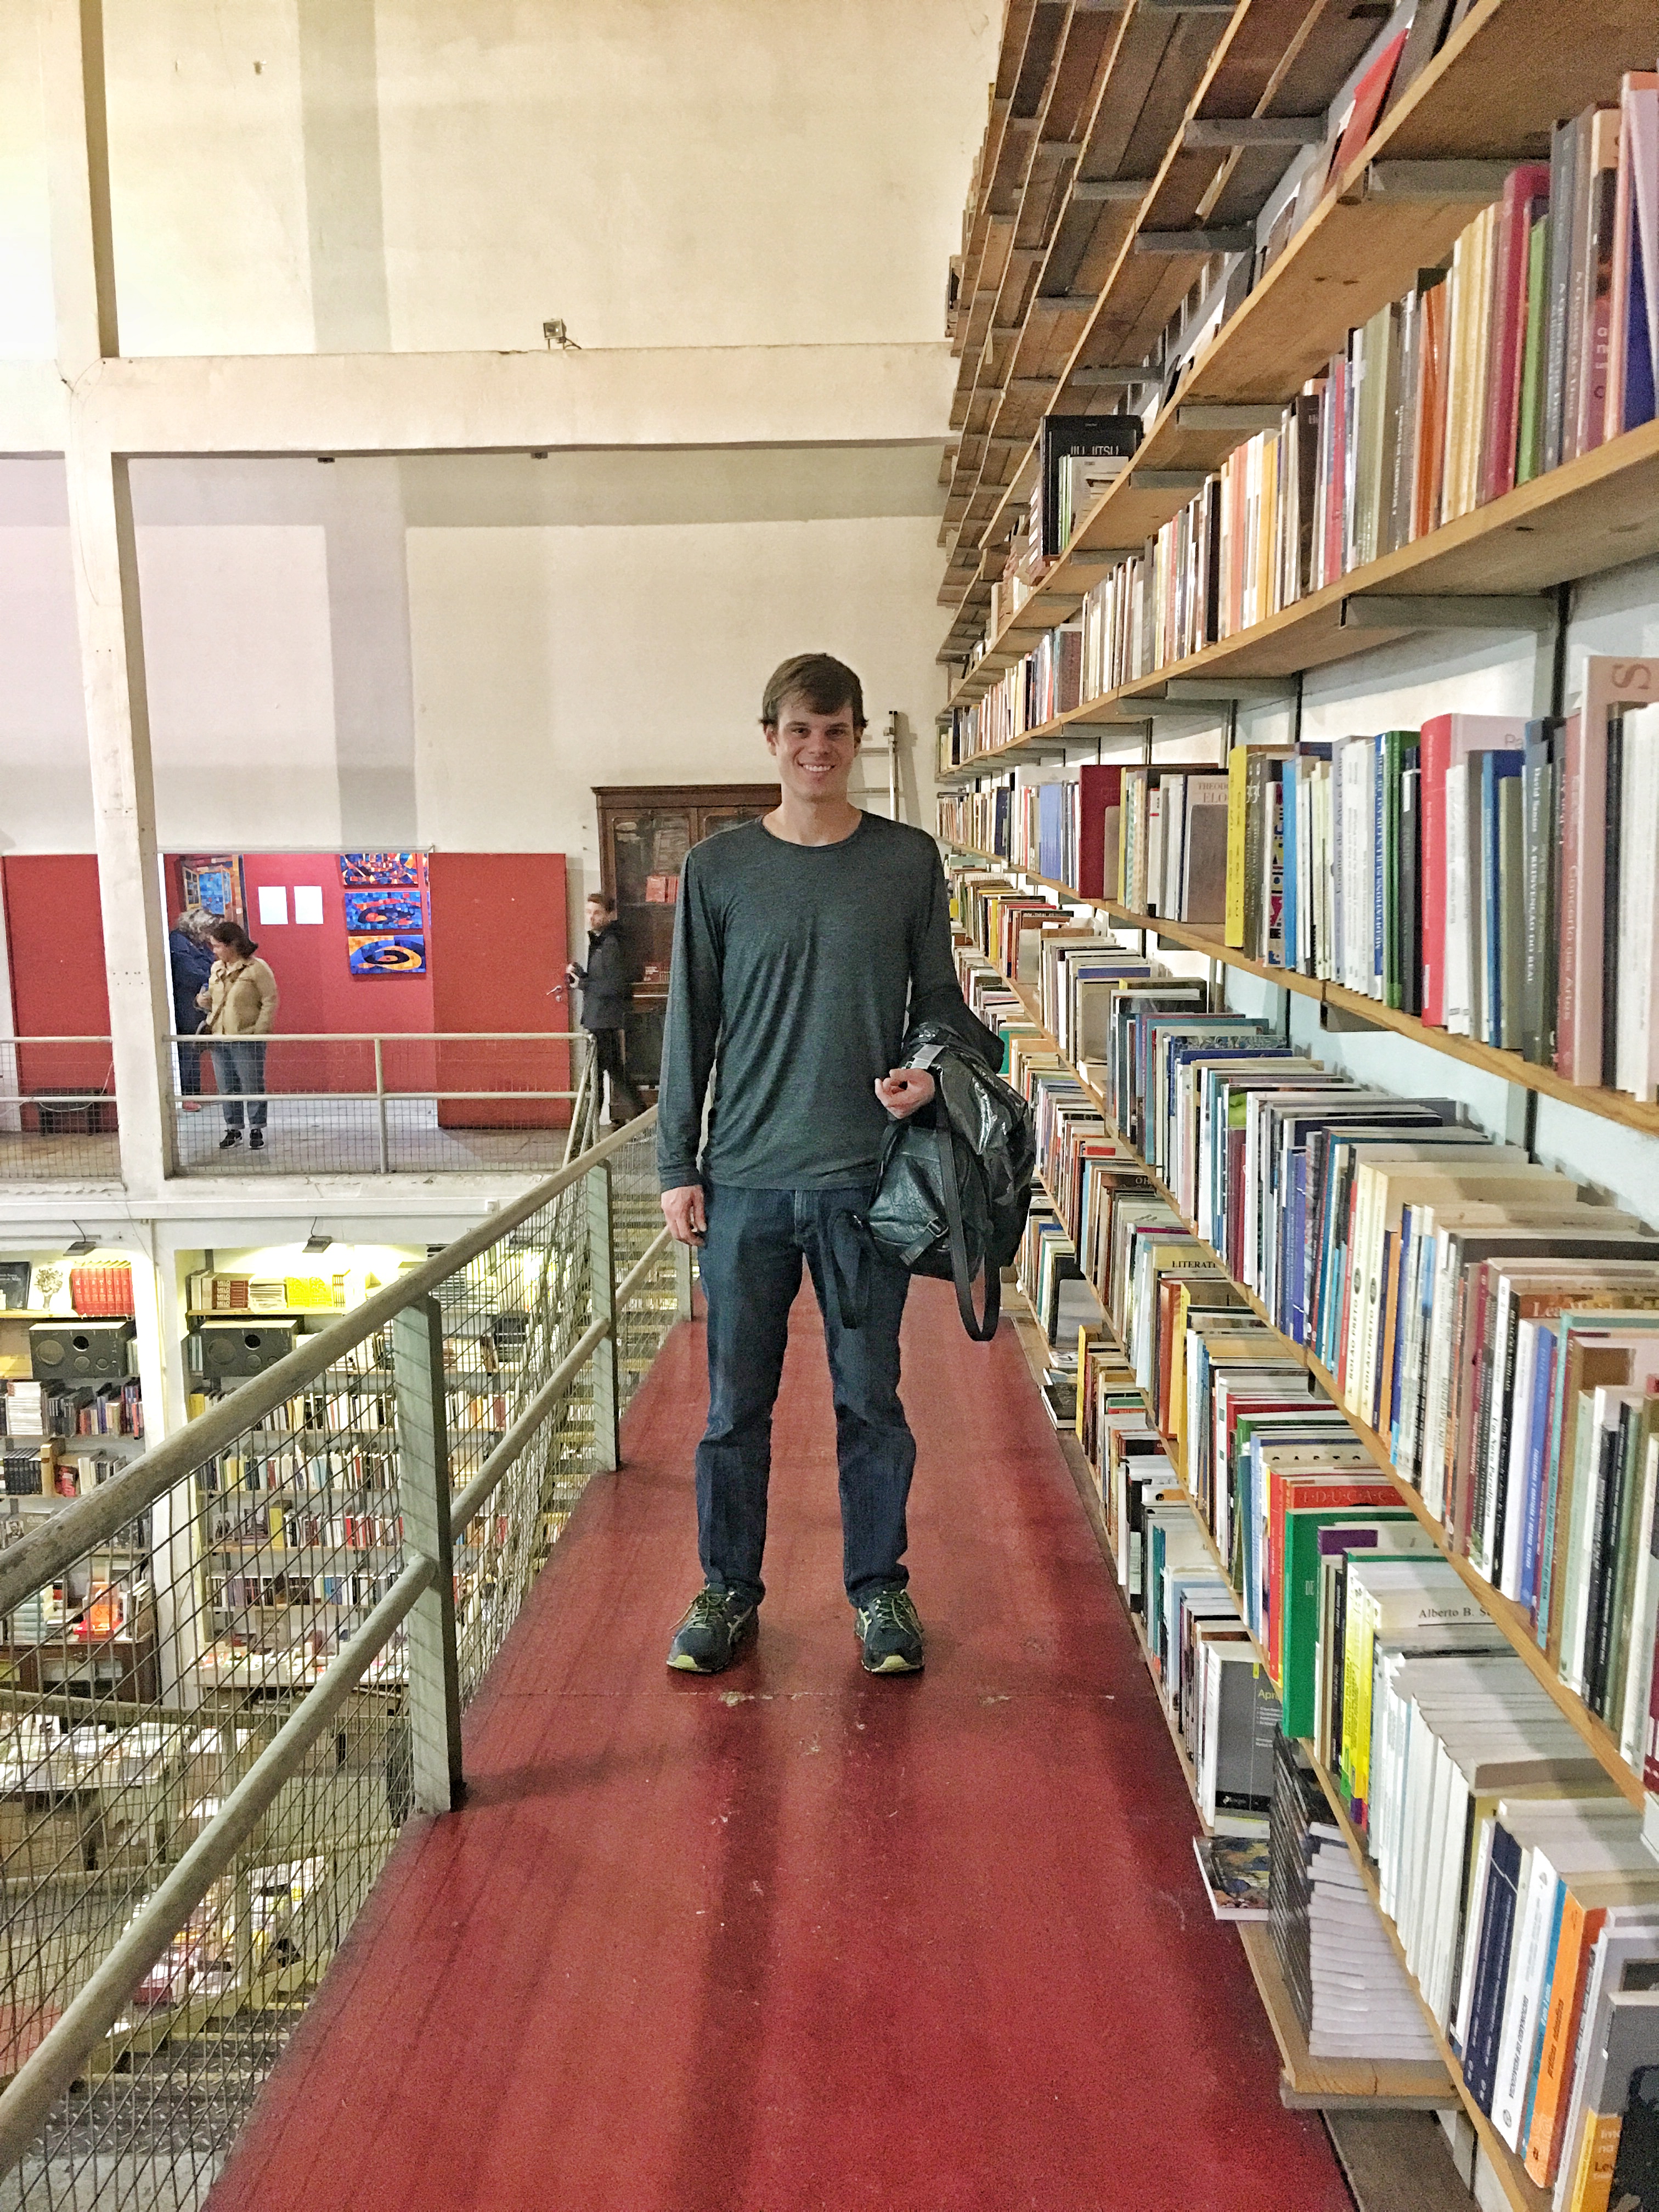 Exploring the Ler Devegar bookstore